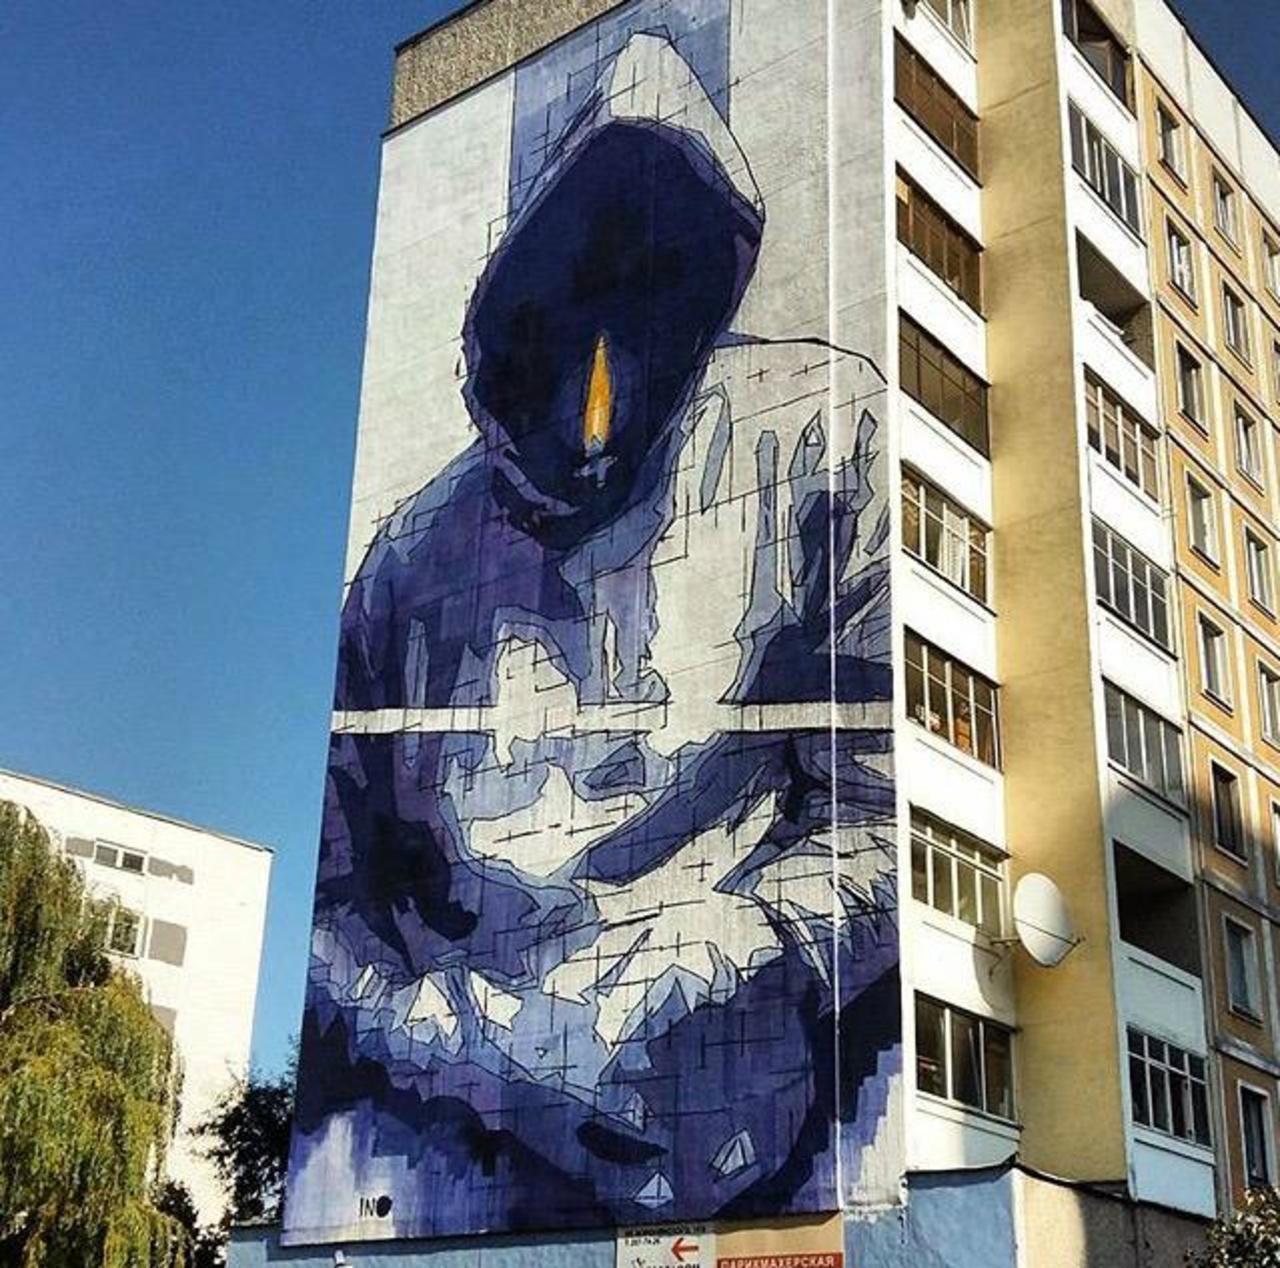 'Man With No Name' 
New Street Art by iNO in Minsk, Belarus 

#art #graffiti #mural #streetart http://t.co/afYlD1r32v